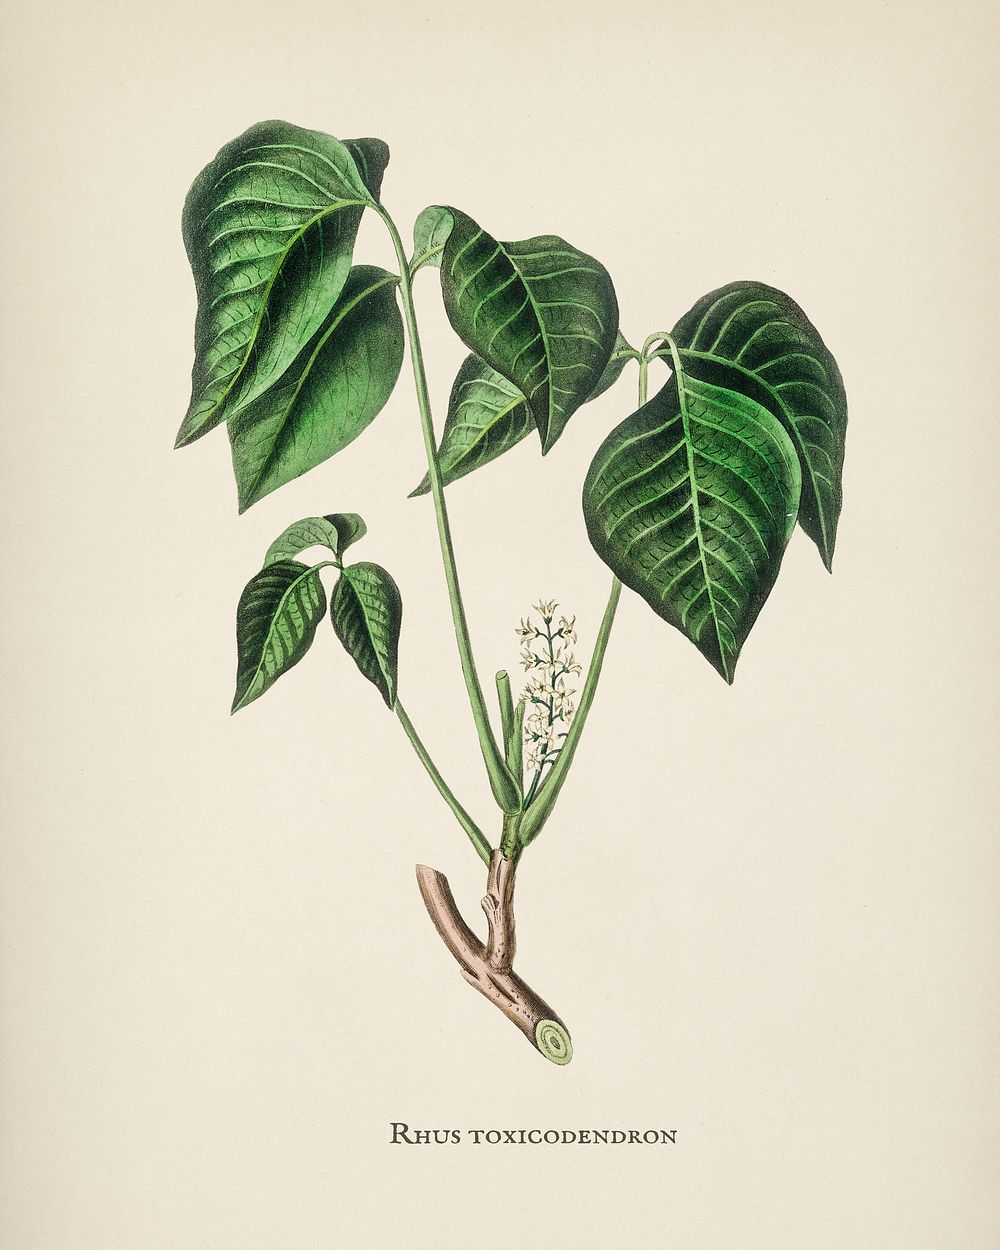 Poison ivy (Rhus toxicodendron) illustration from Medical Botany (1836) by John Stephenson and James Morss Churchill.